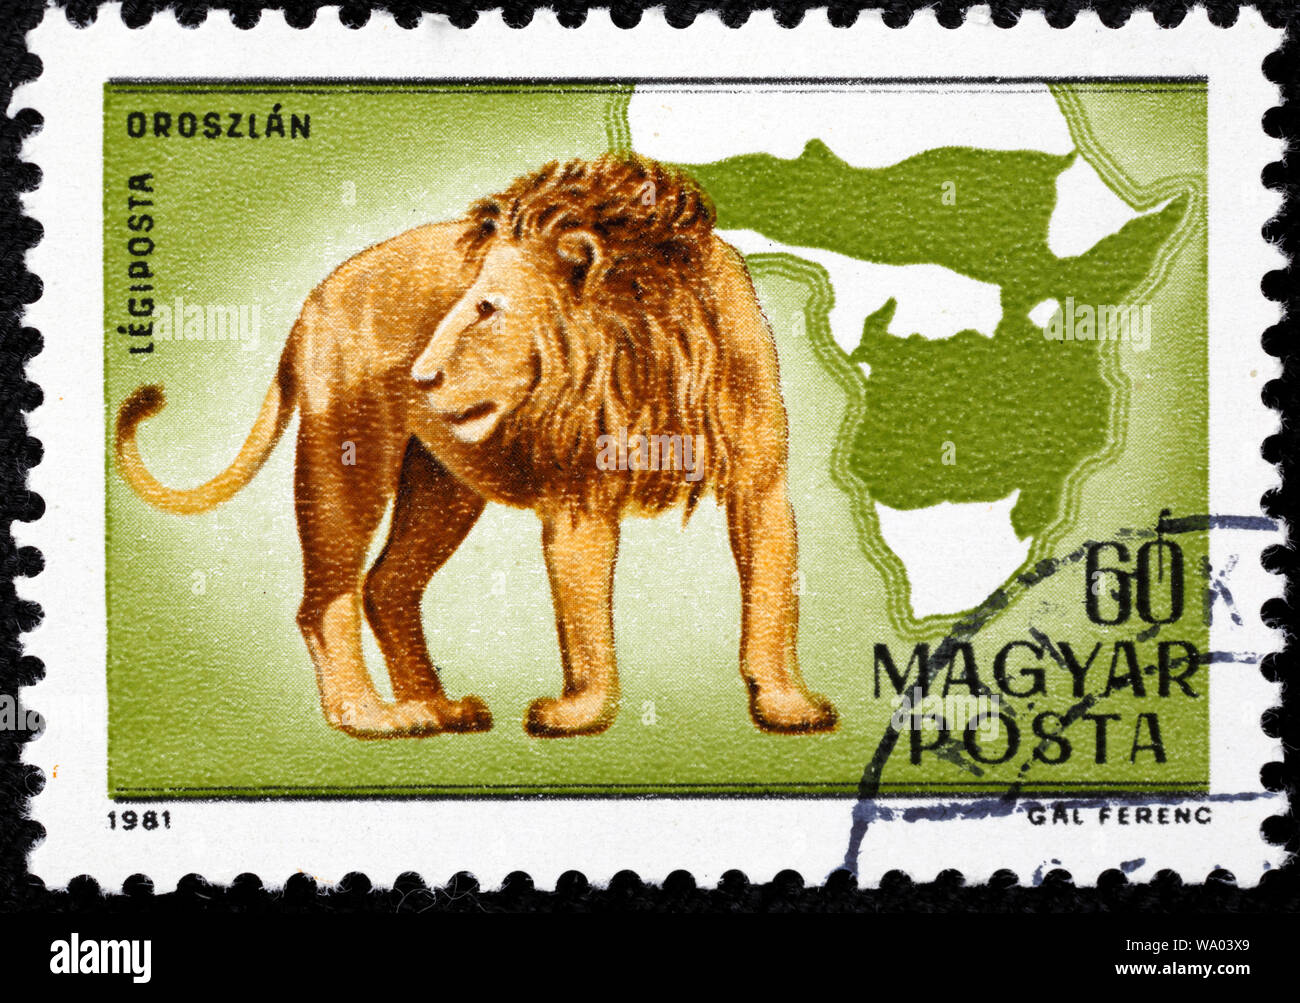 Lion, Panthera leo, postage stamp, Hungary, 1981 Stock Photo